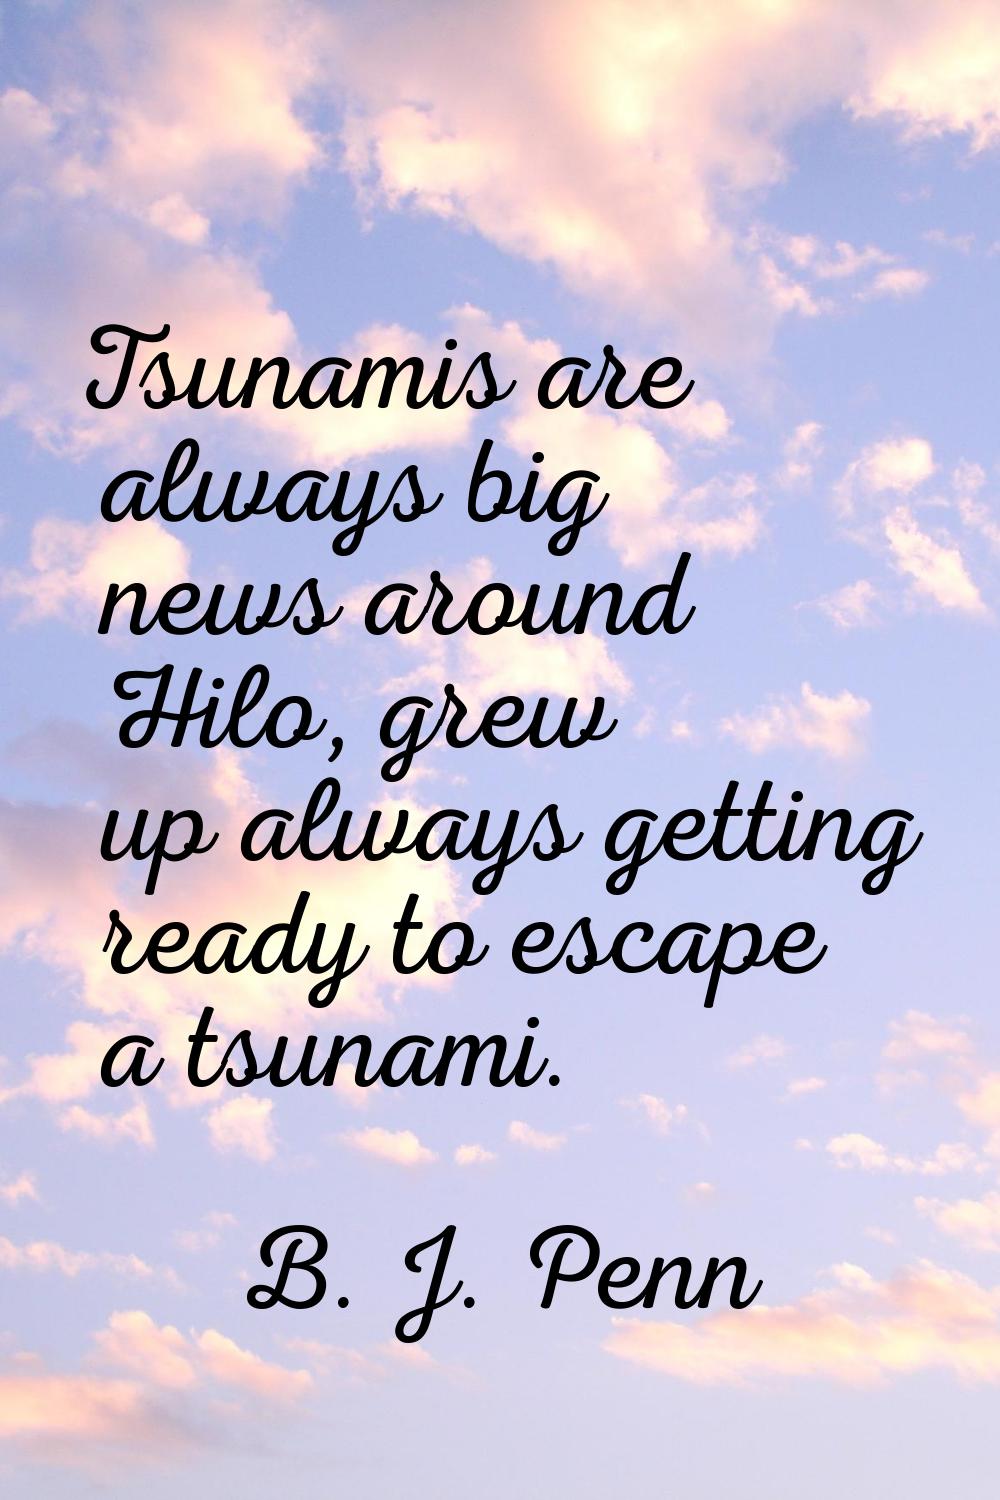 Tsunamis are always big news around Hilo, grew up always getting ready to escape a tsunami.